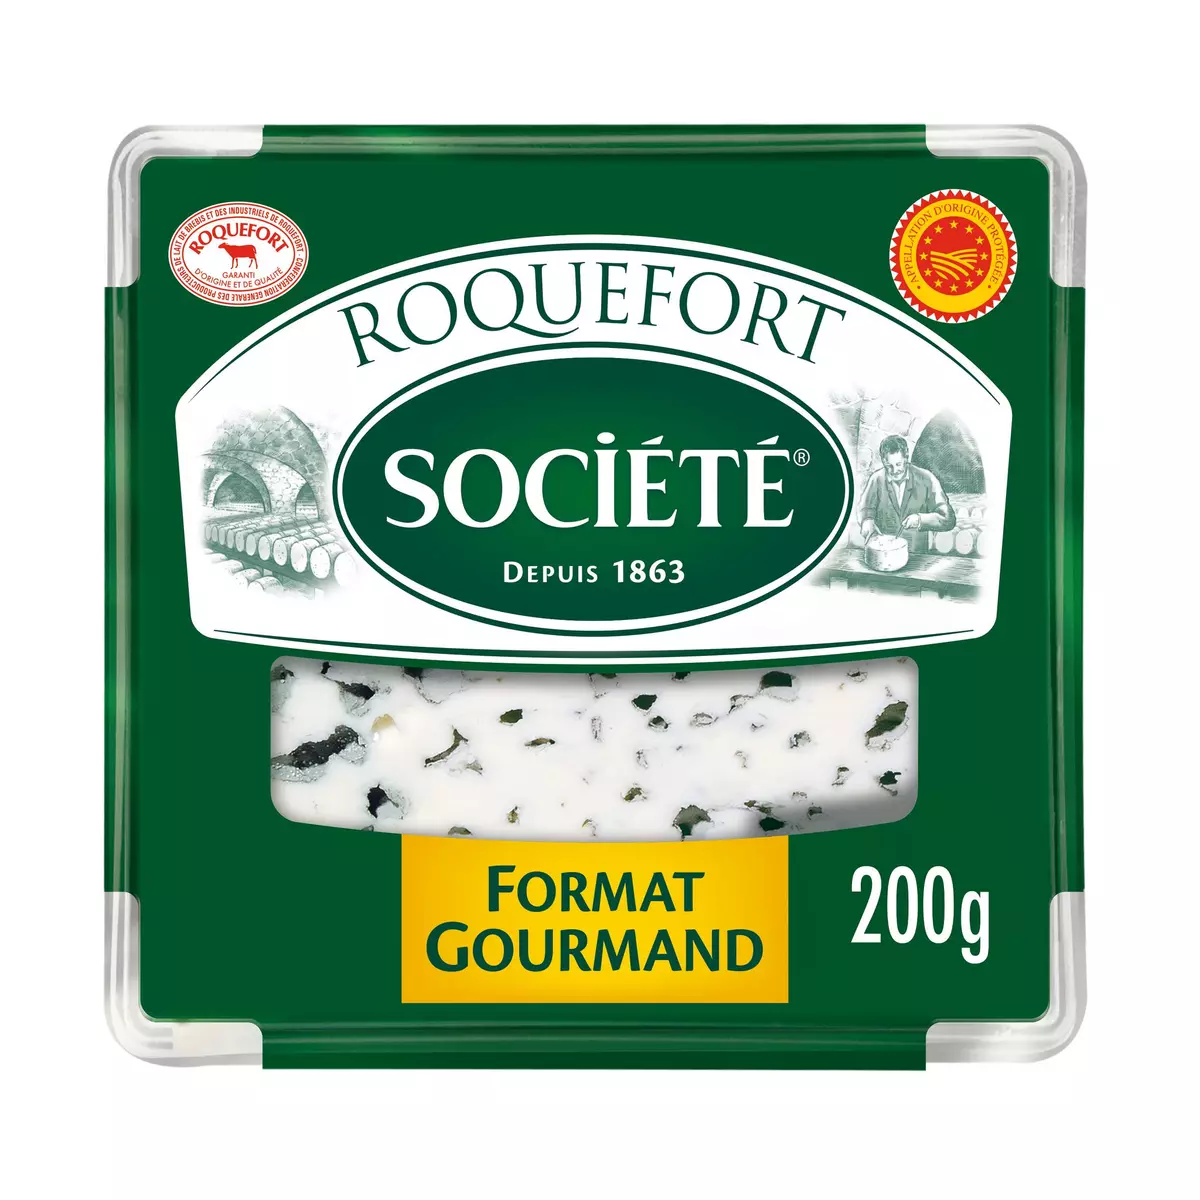 SOCIETE Roquefort AOP 200g